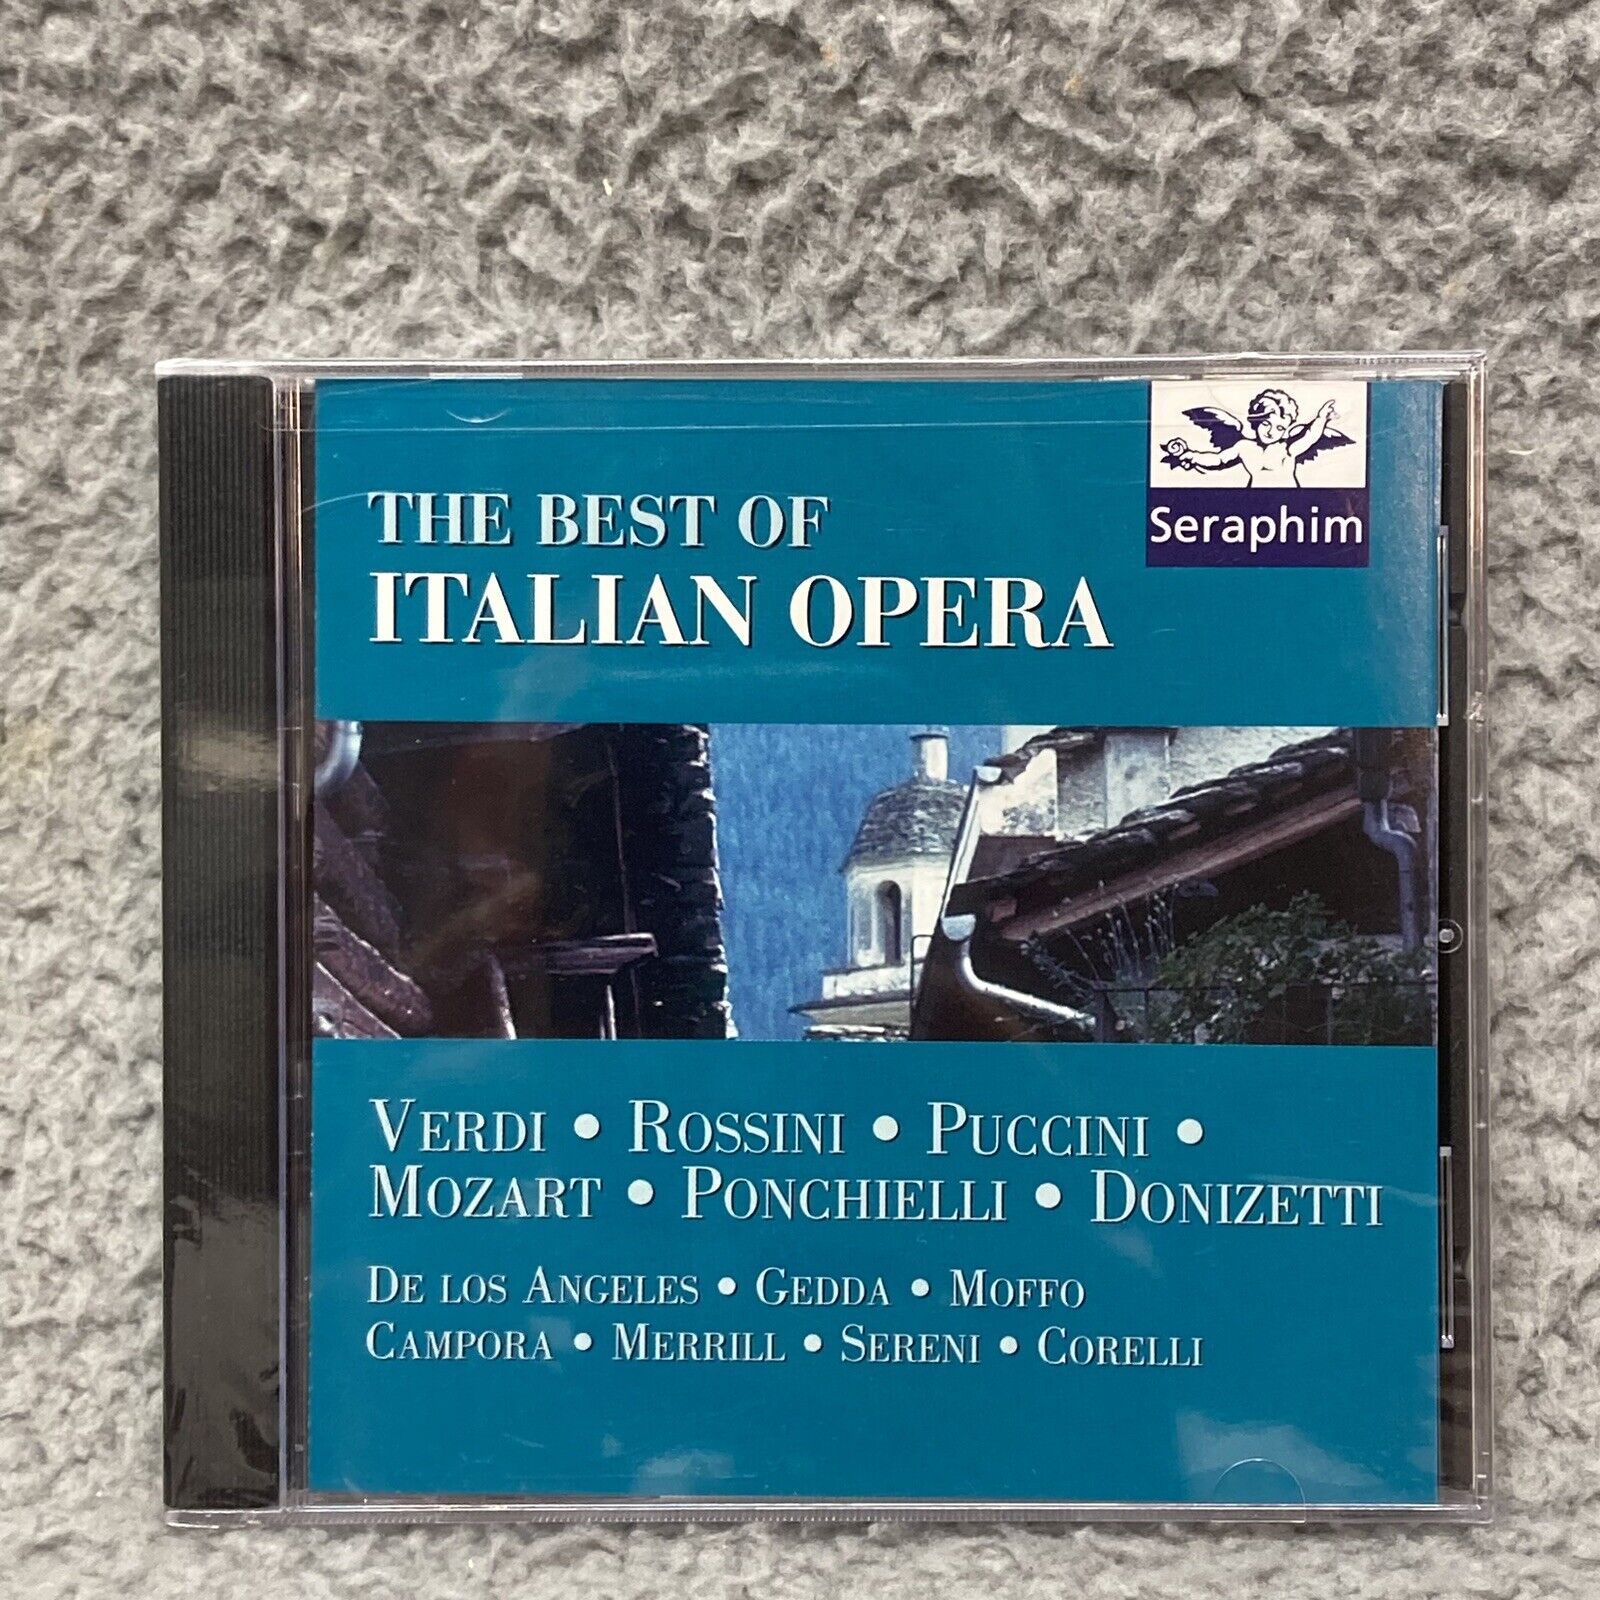 The Best of Italian Opera - Audio CD By Verdi - NEW SEALED